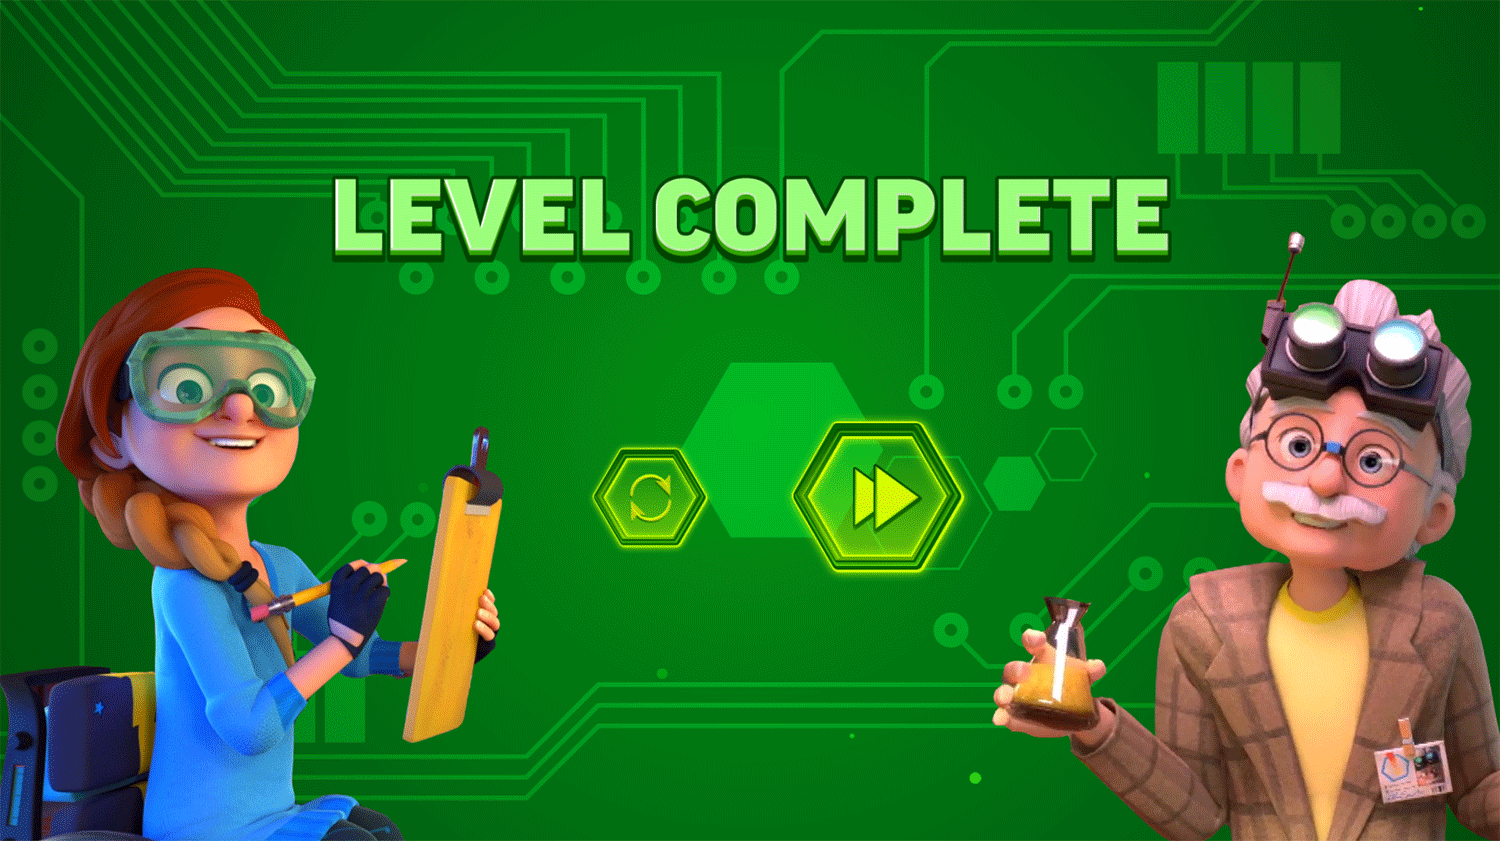 Electrio Game Level Complete Screenshot.